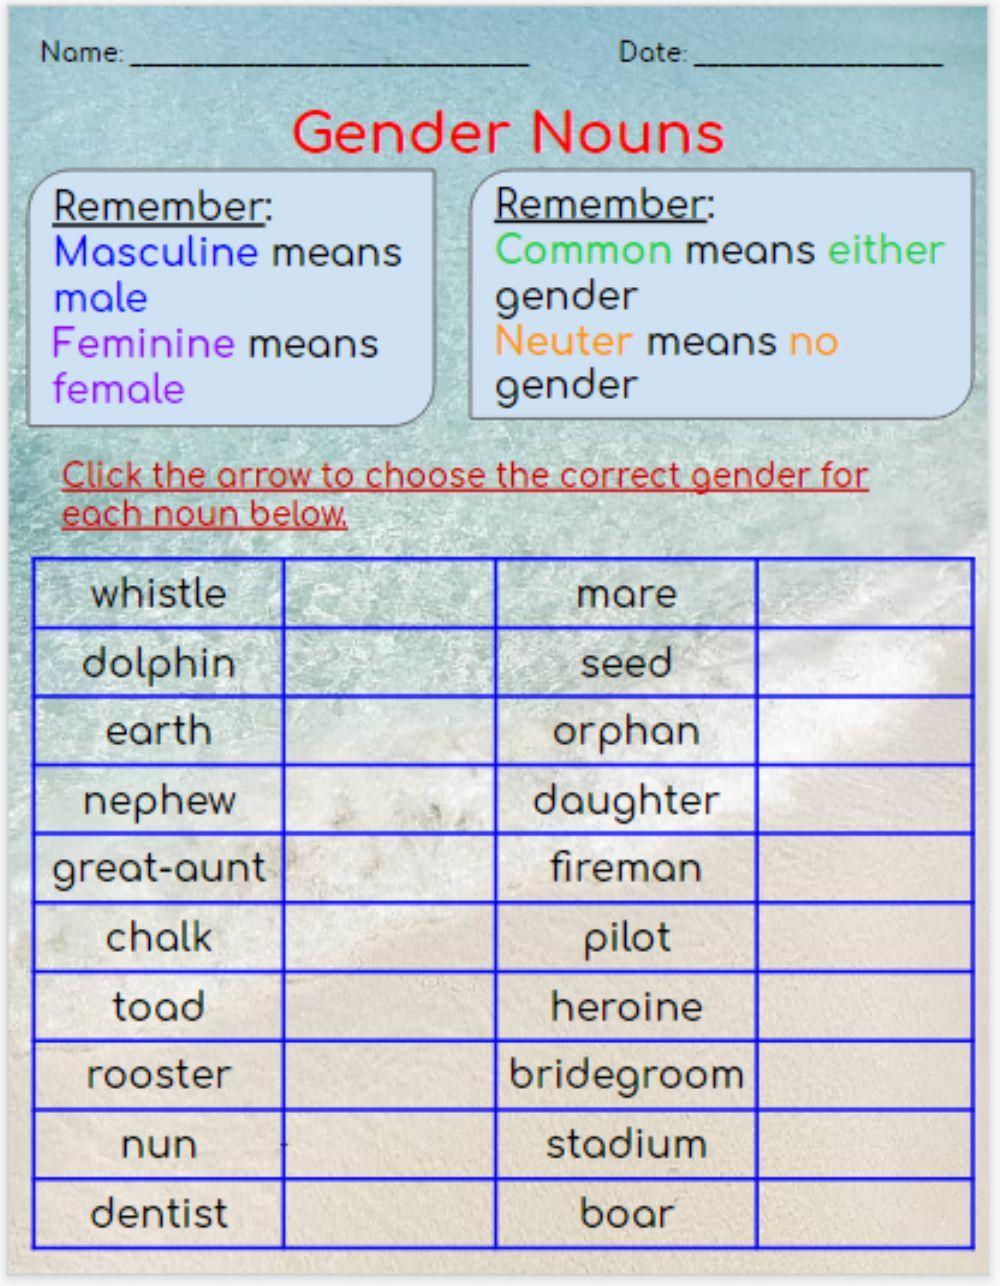 nouns-gender-videos-and-worksheets